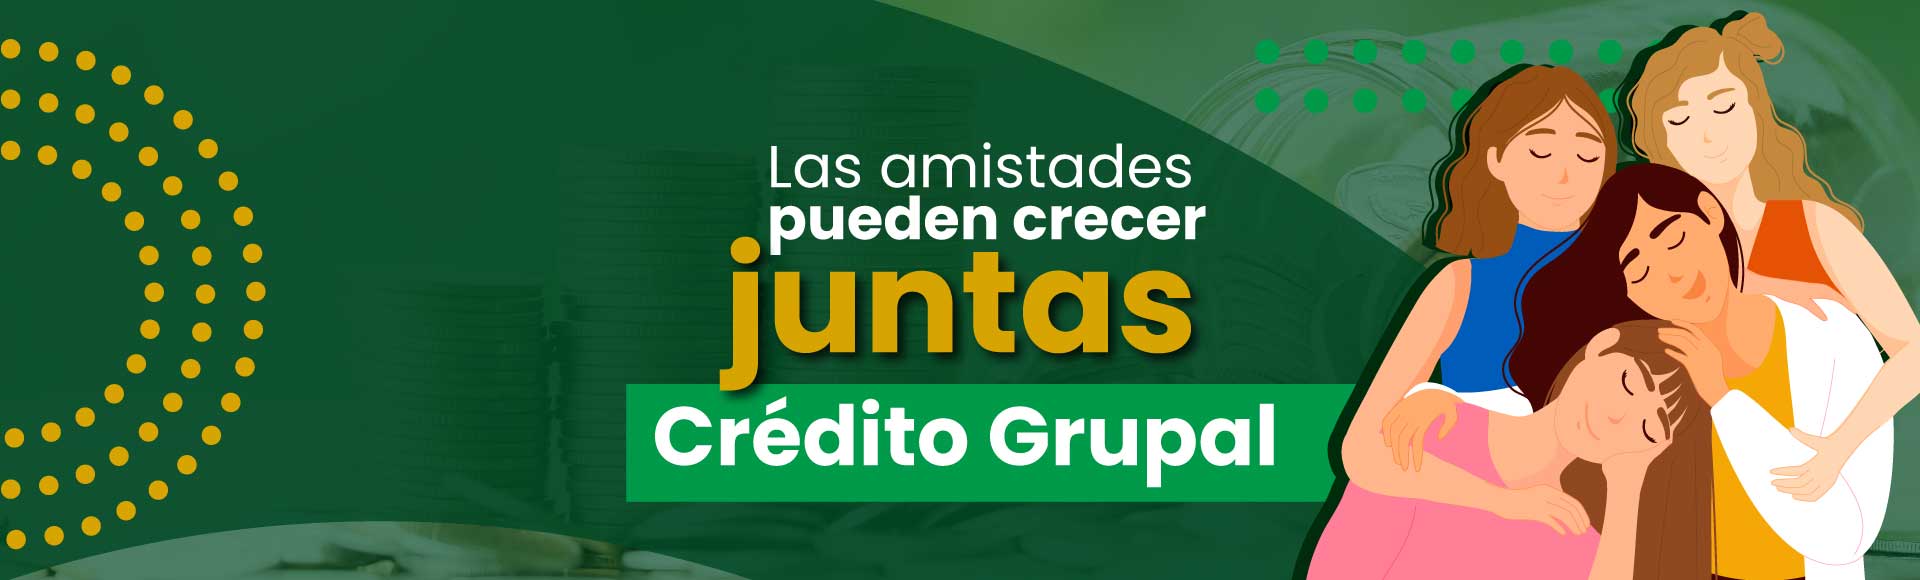 Encabezado Crédito Grupal - Banco Forjadores